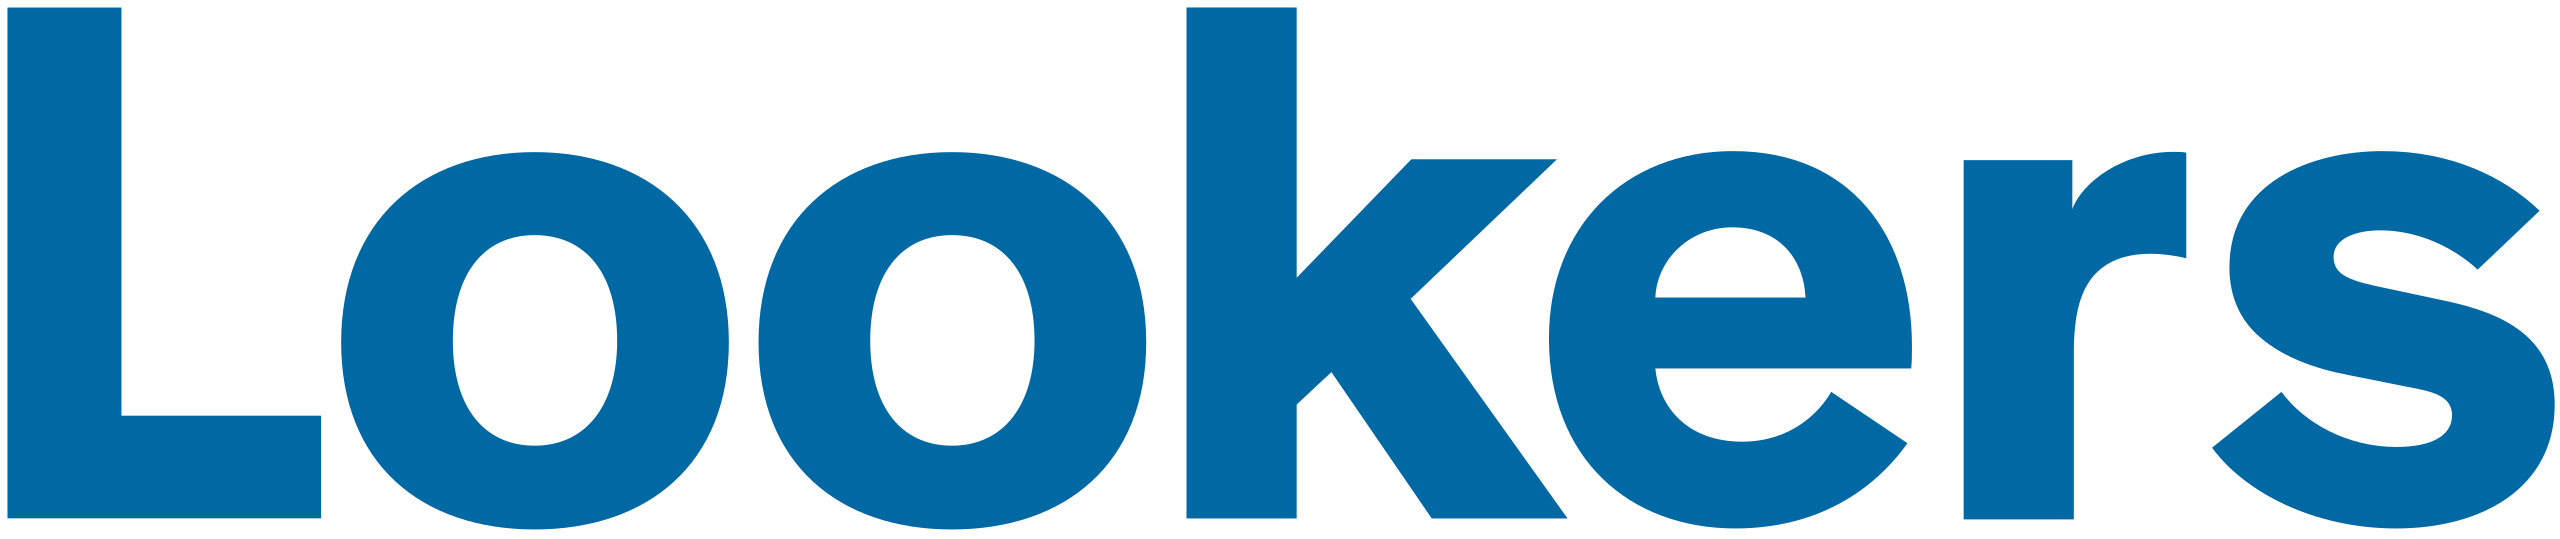 Lookers_logo